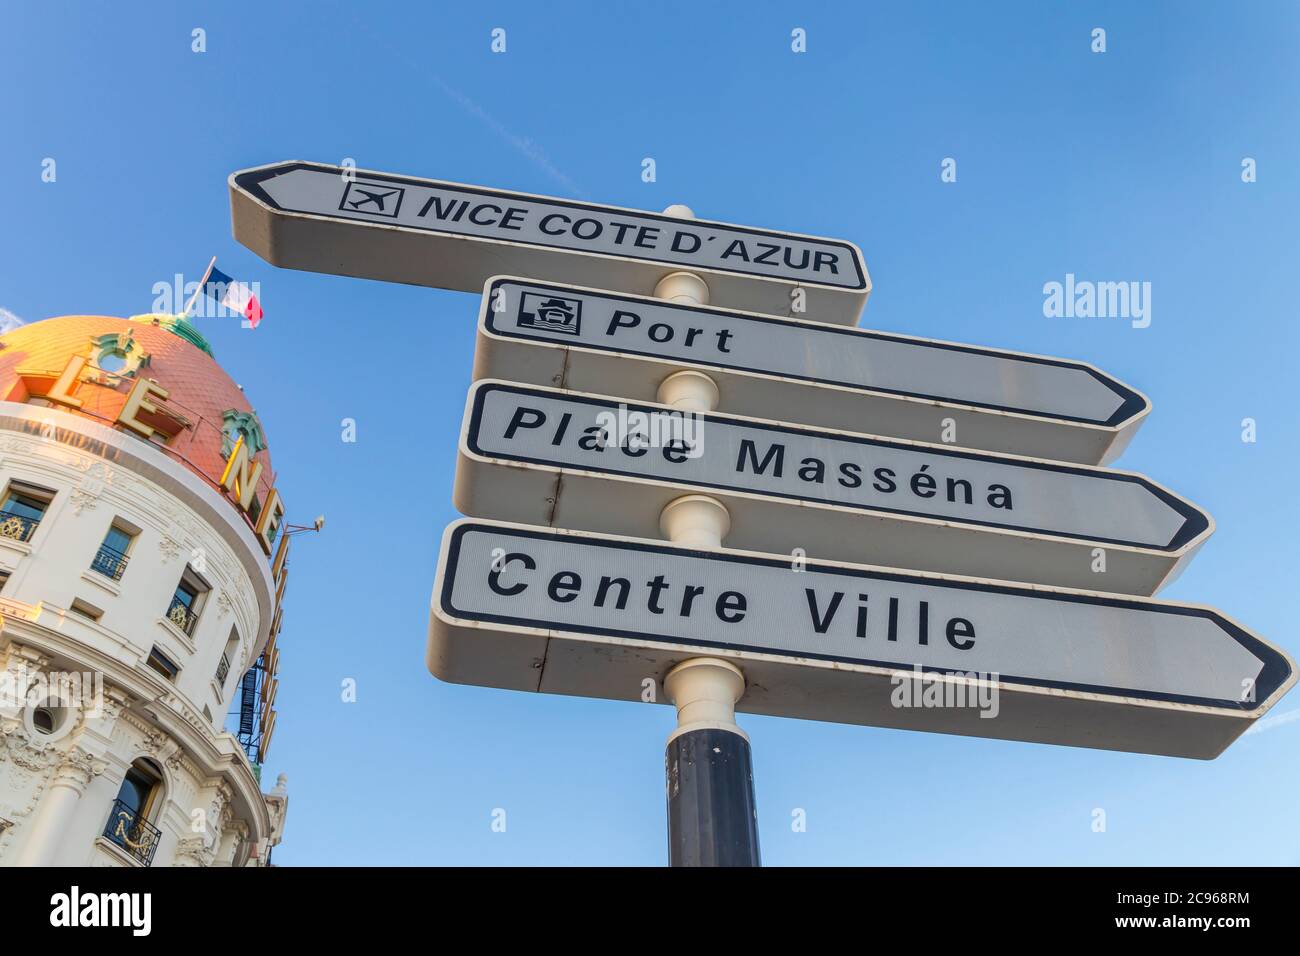 Street signs near the famous Le Negresco building, Nice, Cote d'Azur, France, Europe Stock Photo